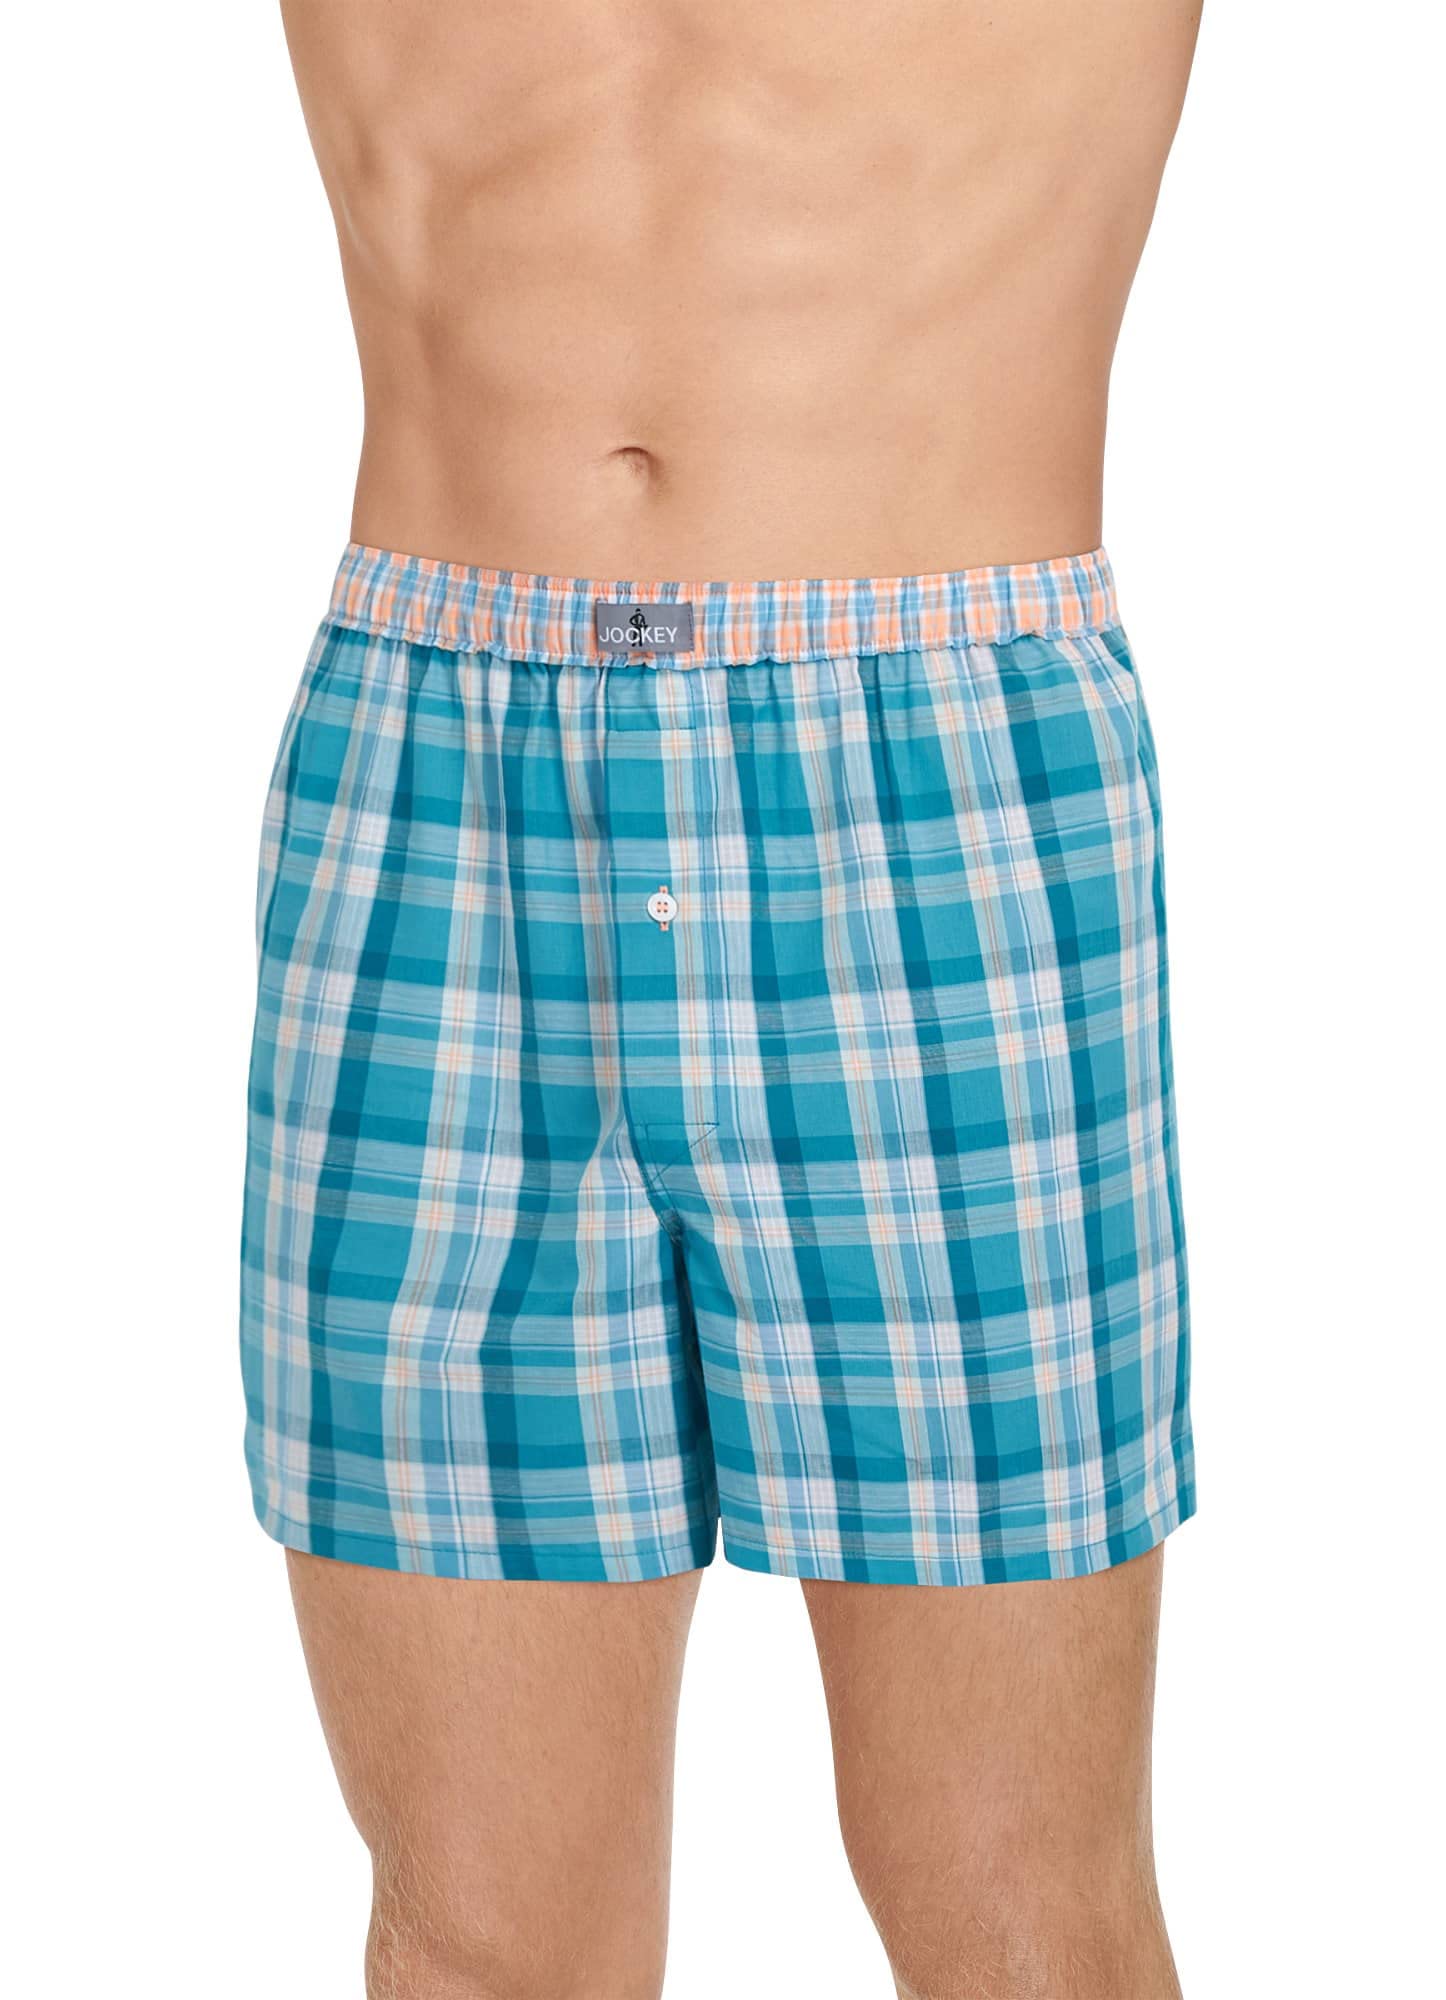 Jockey Men's Underwear 100% Cotton Woven 5" Boxer (Drowsy Dream Plaid, Size: S, L & XL) $4.99 & More + Free Shipping